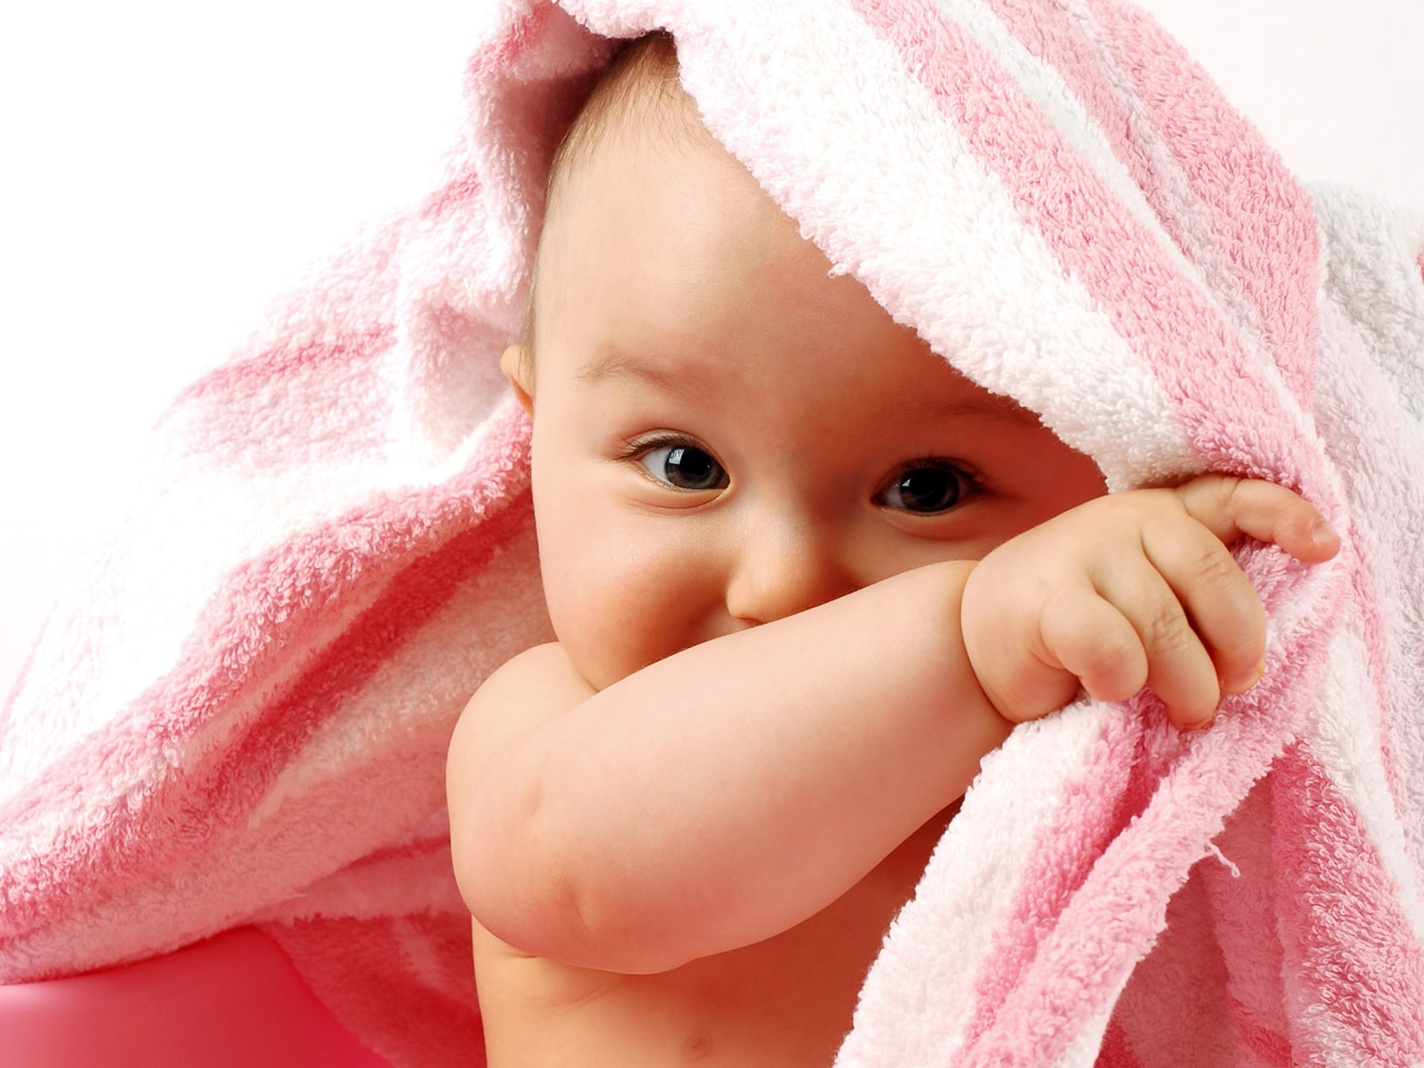 50+] Cute Baby Photos Wallpapers - WallpaperSafari